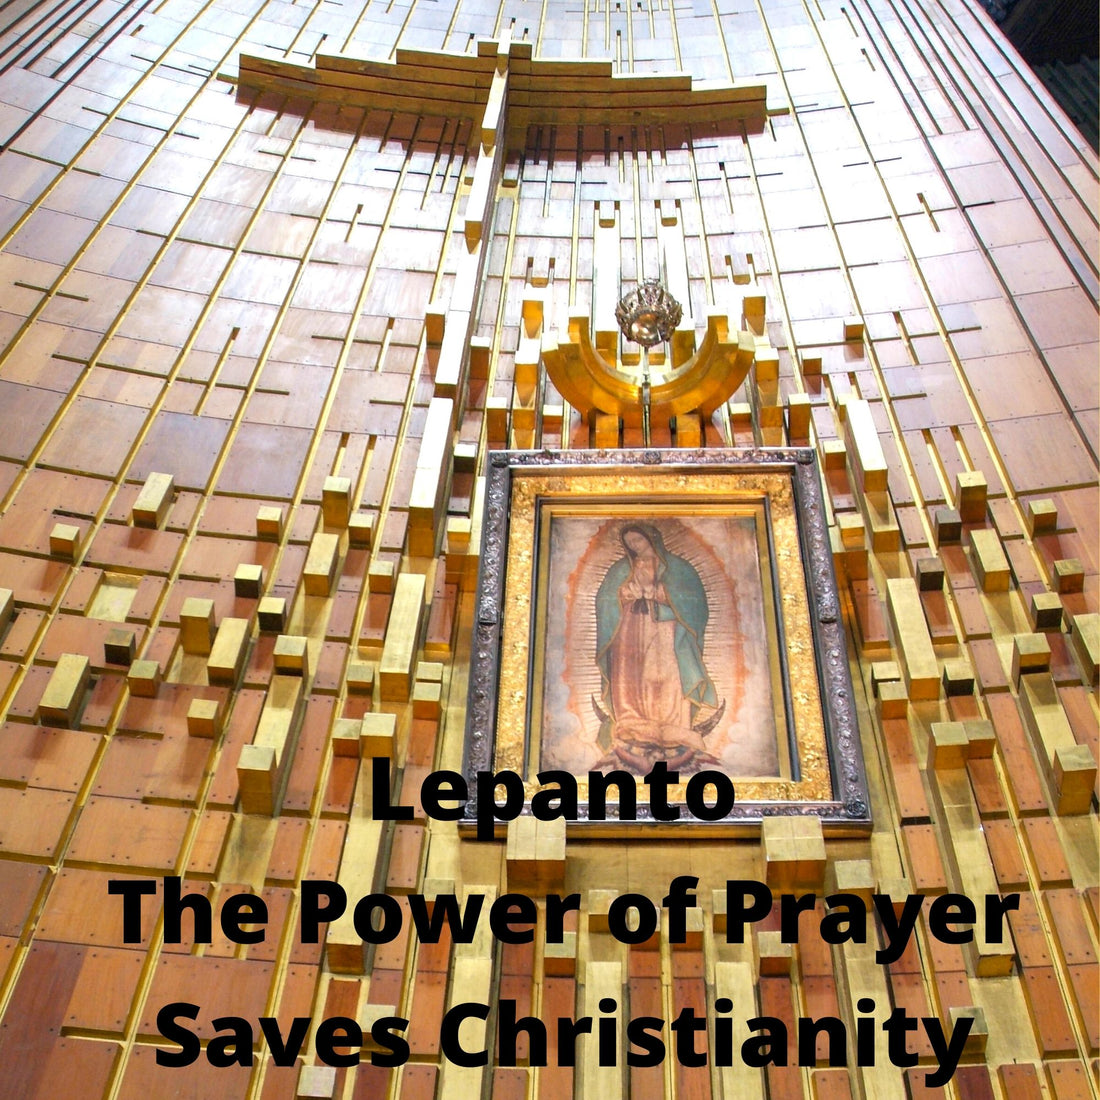 Battle of Lepanto - the Power of Prayer Saves Christianity